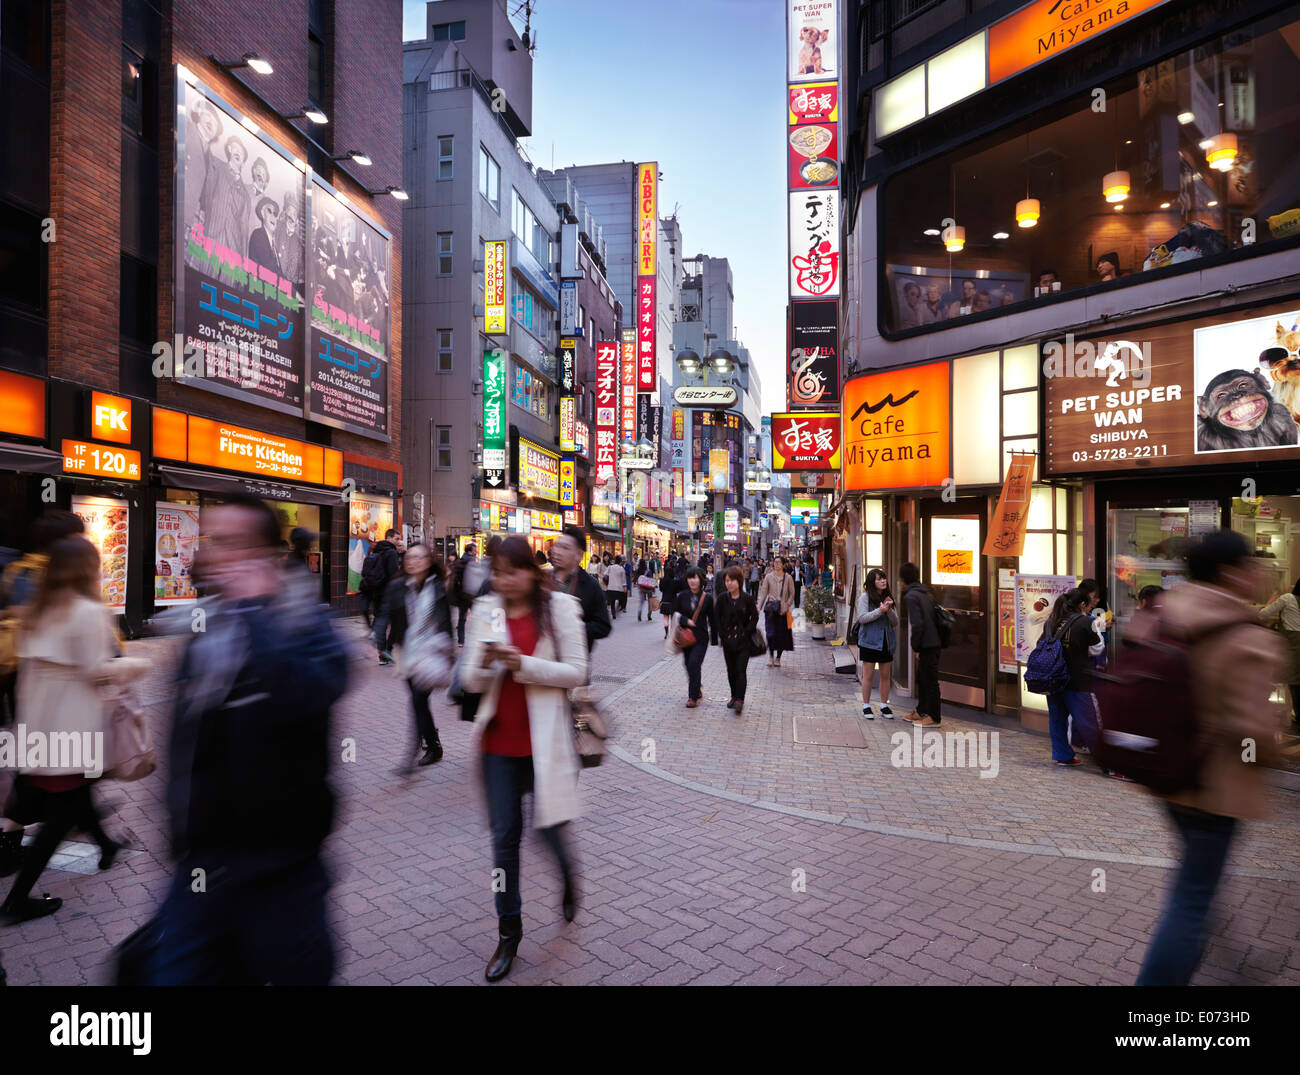 People on streets in Shibuya, Tokyo, Japan Stock Photo